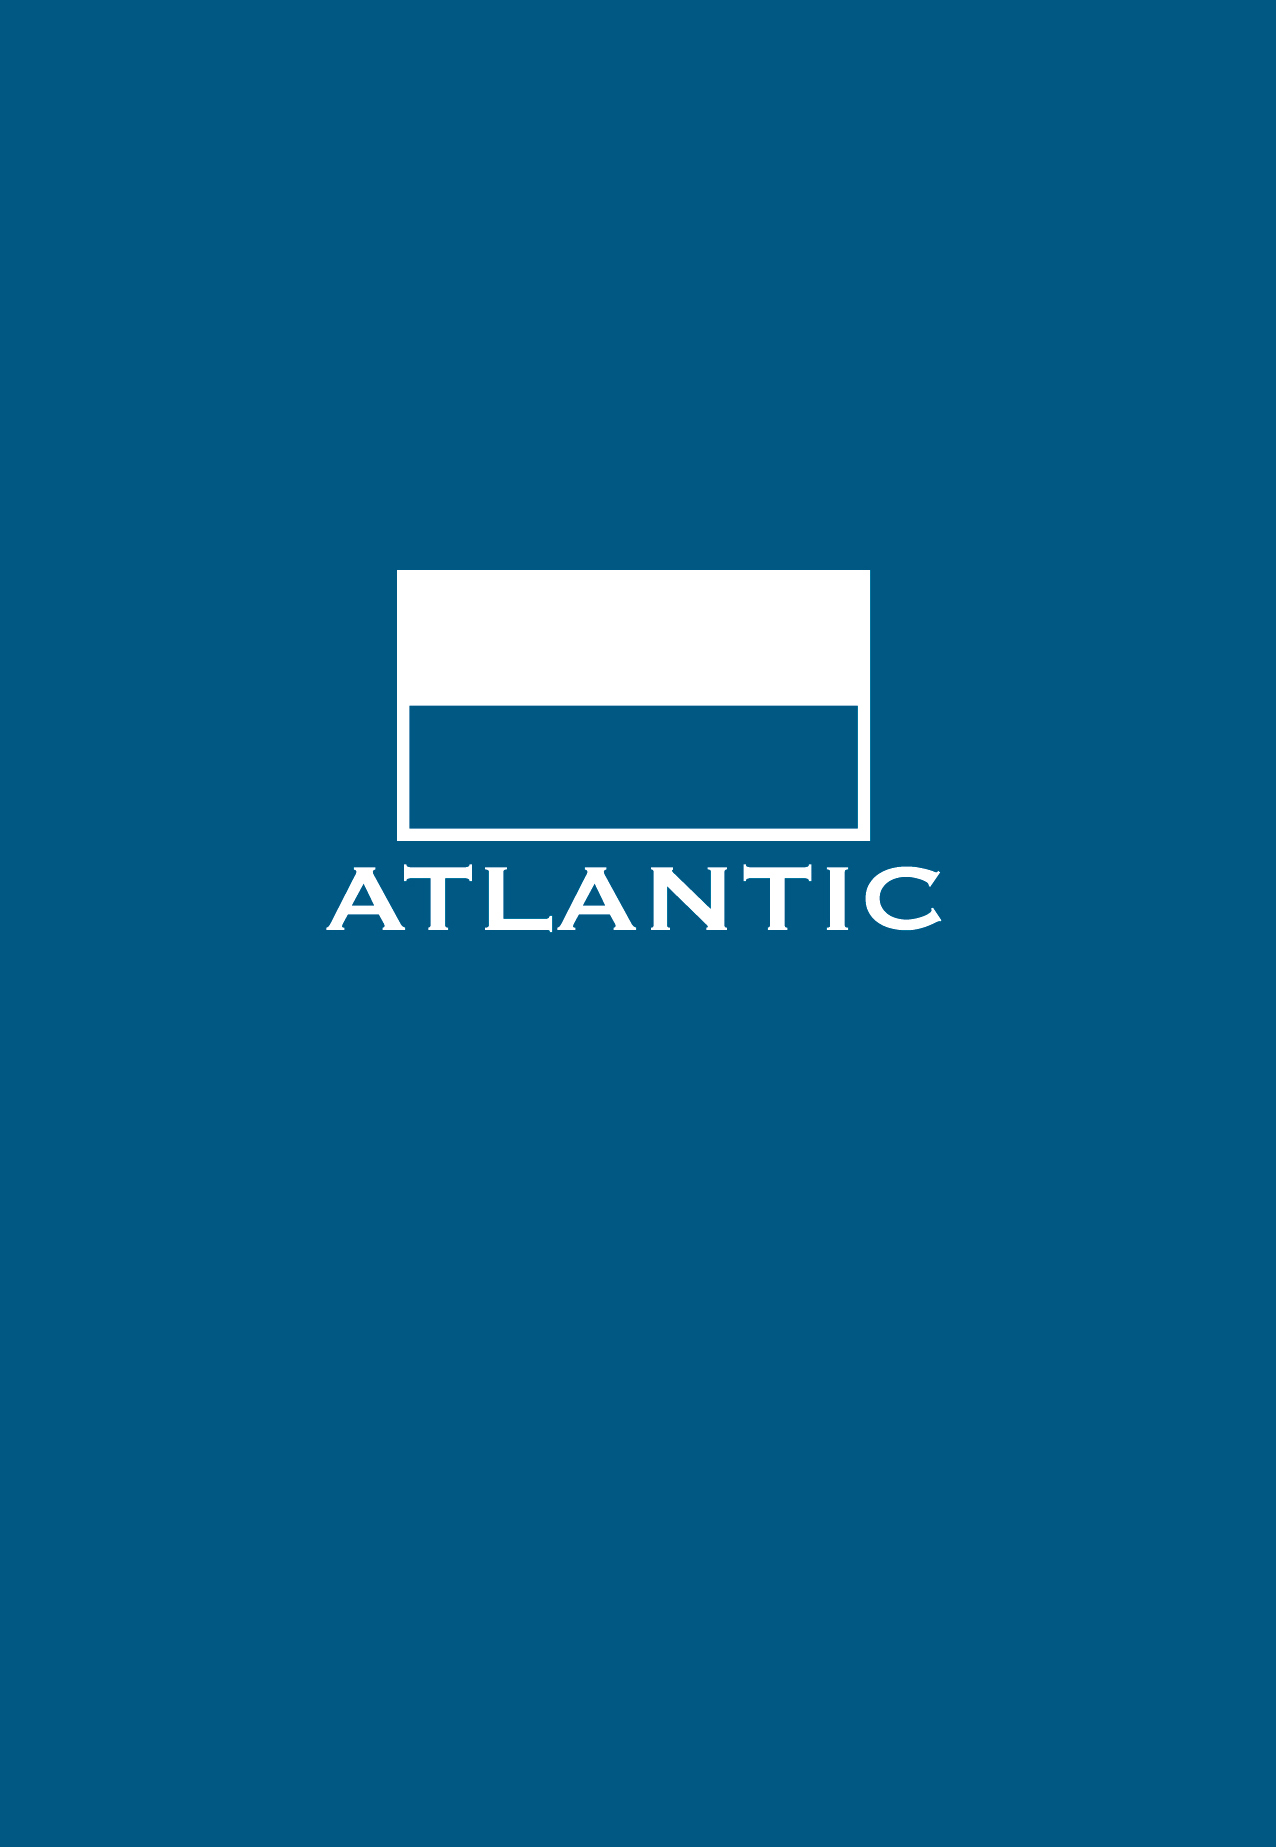 Atlantic Golf Club – (B&W Tour Style)